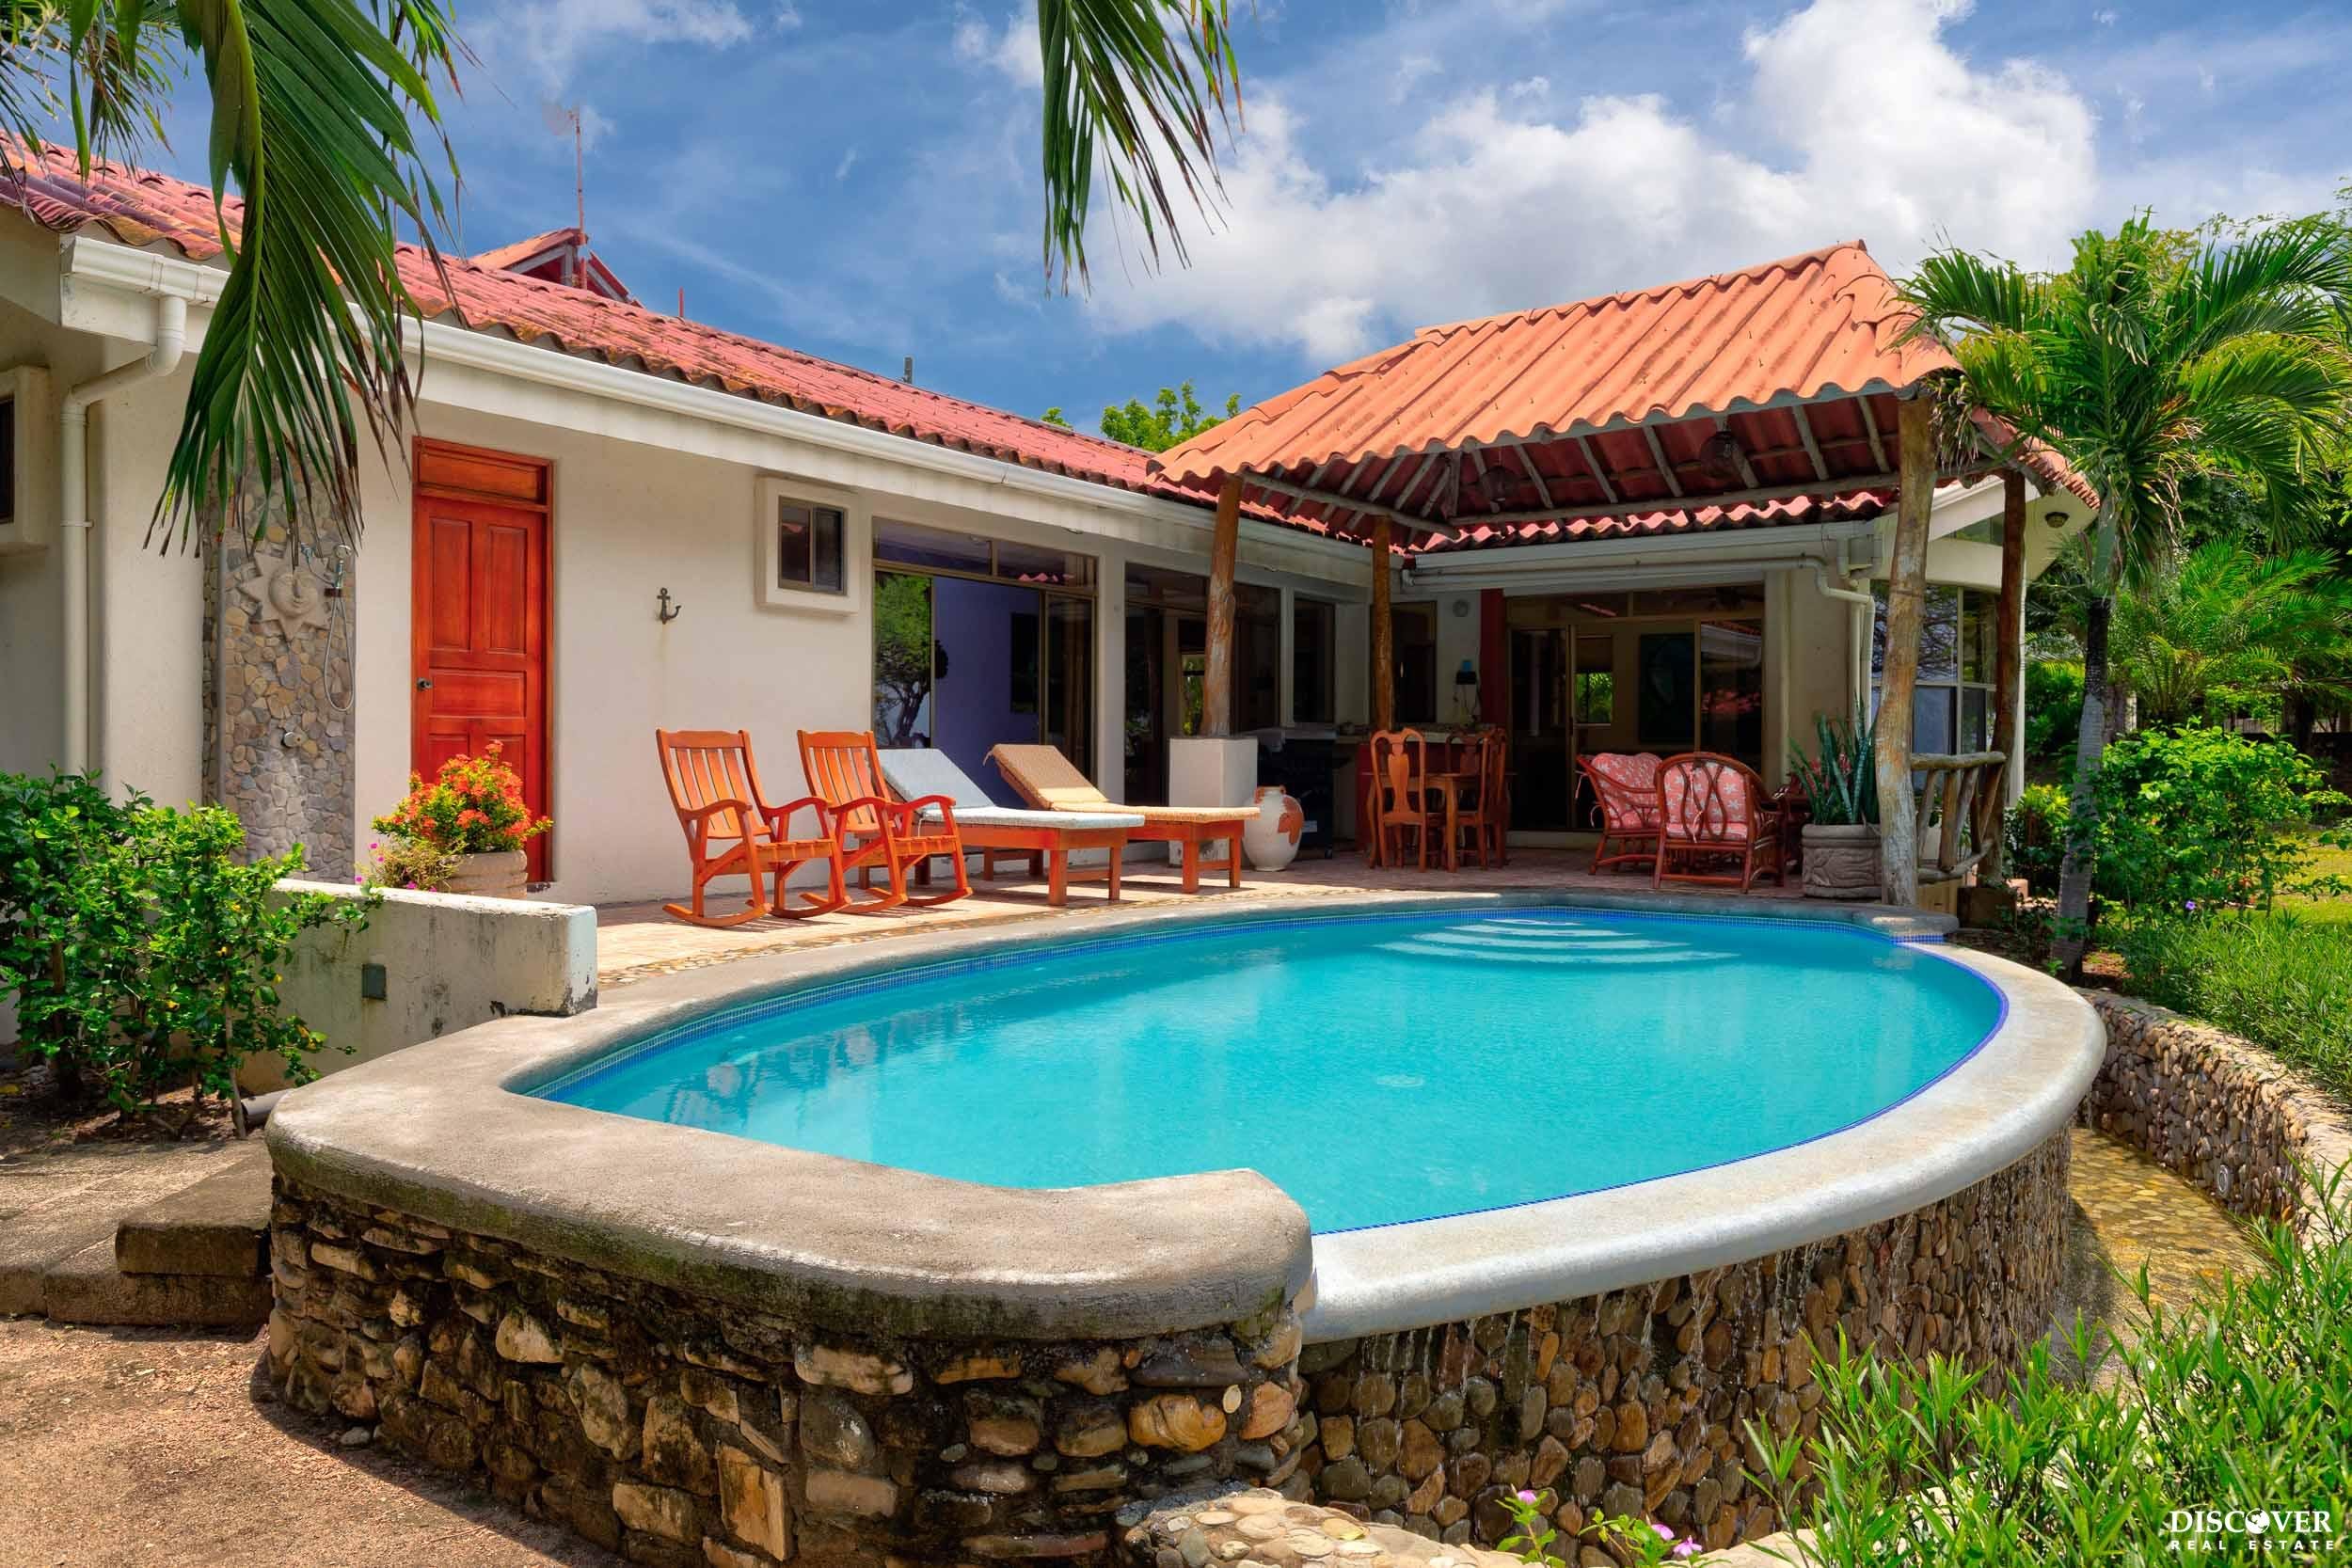 Real Estate for Sale San Juan Del sur Nicaragua November 202118.jpg